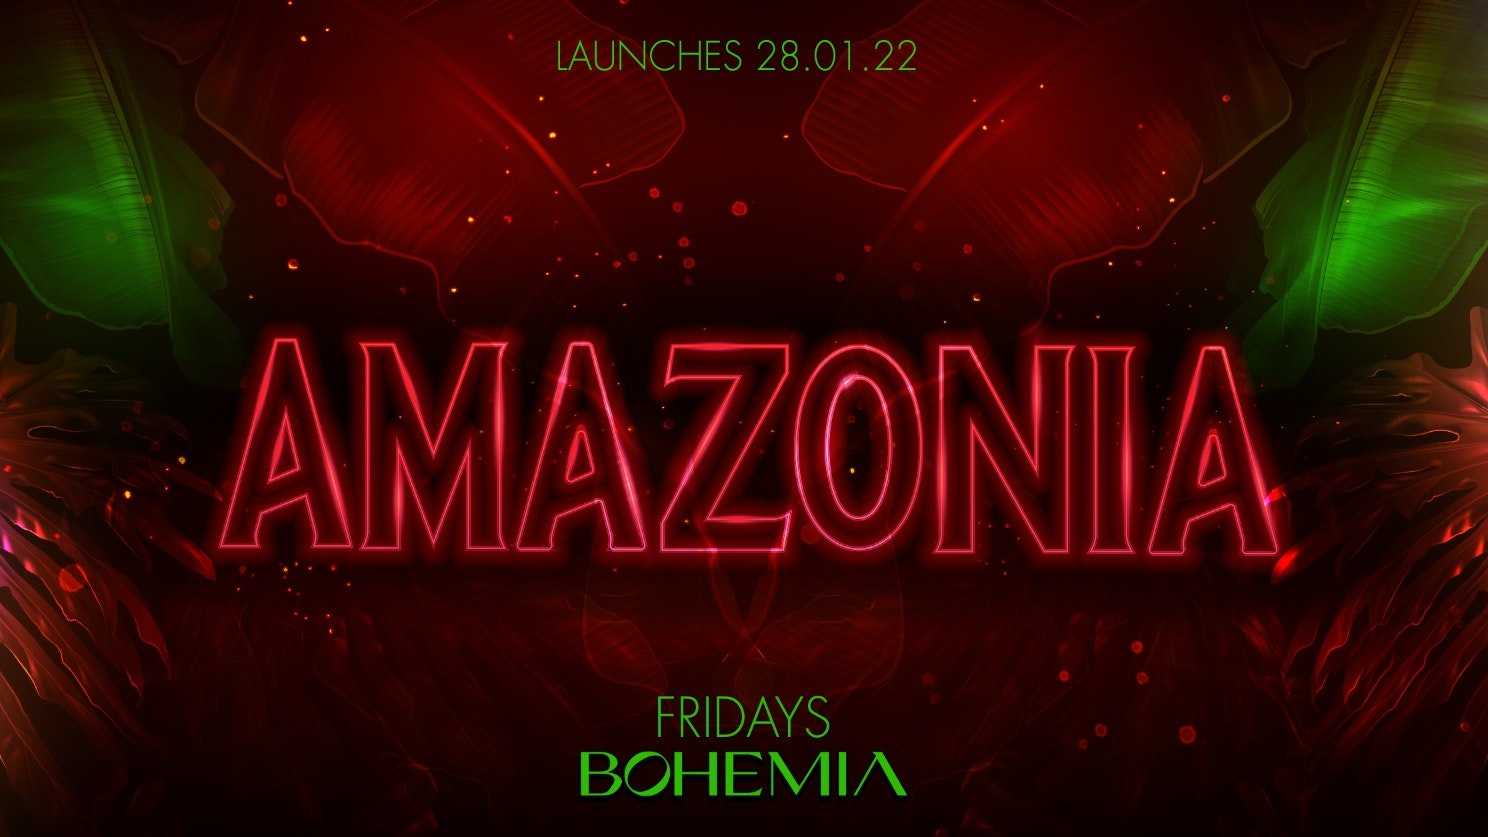 AMAZONIA | BOHEMIA | 19th AUGUST